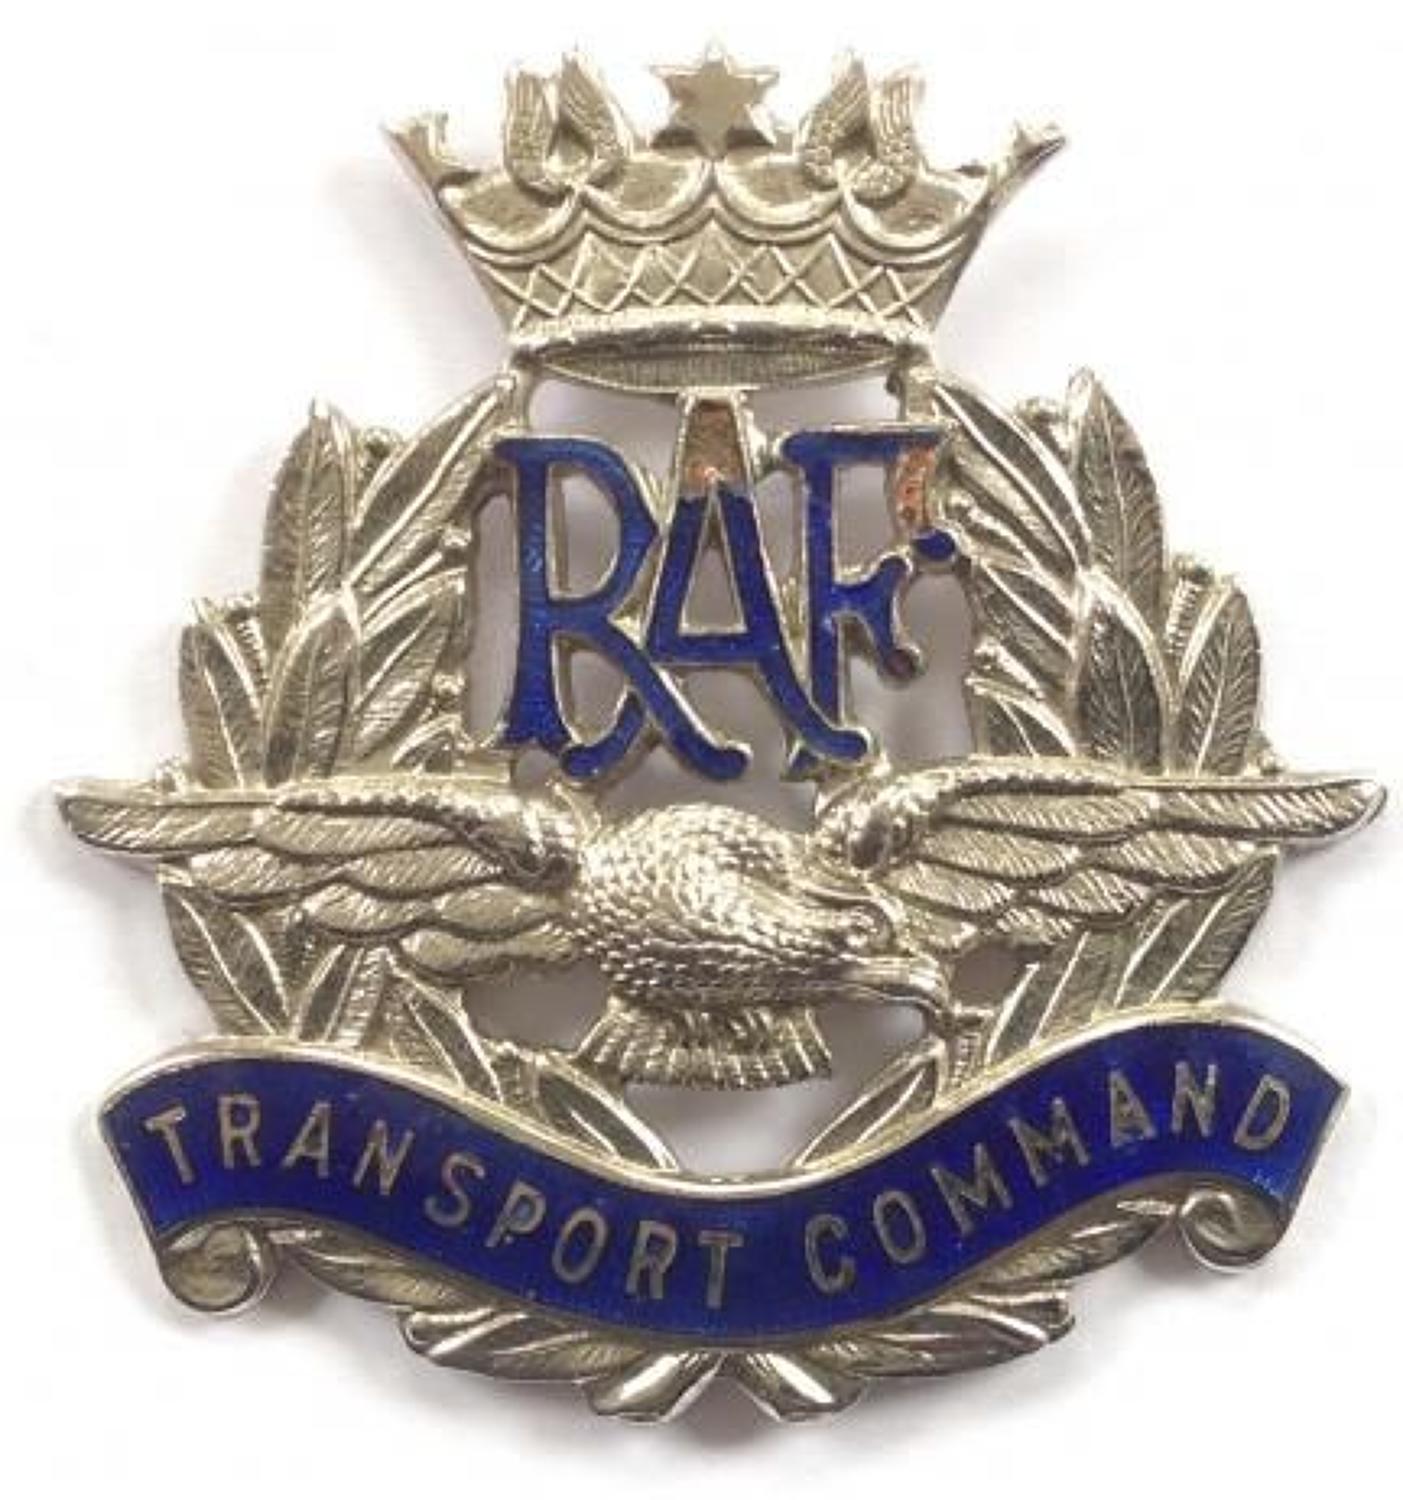 WW2 RAF Transport Command scarce chrome and blue enamel cap badge circ